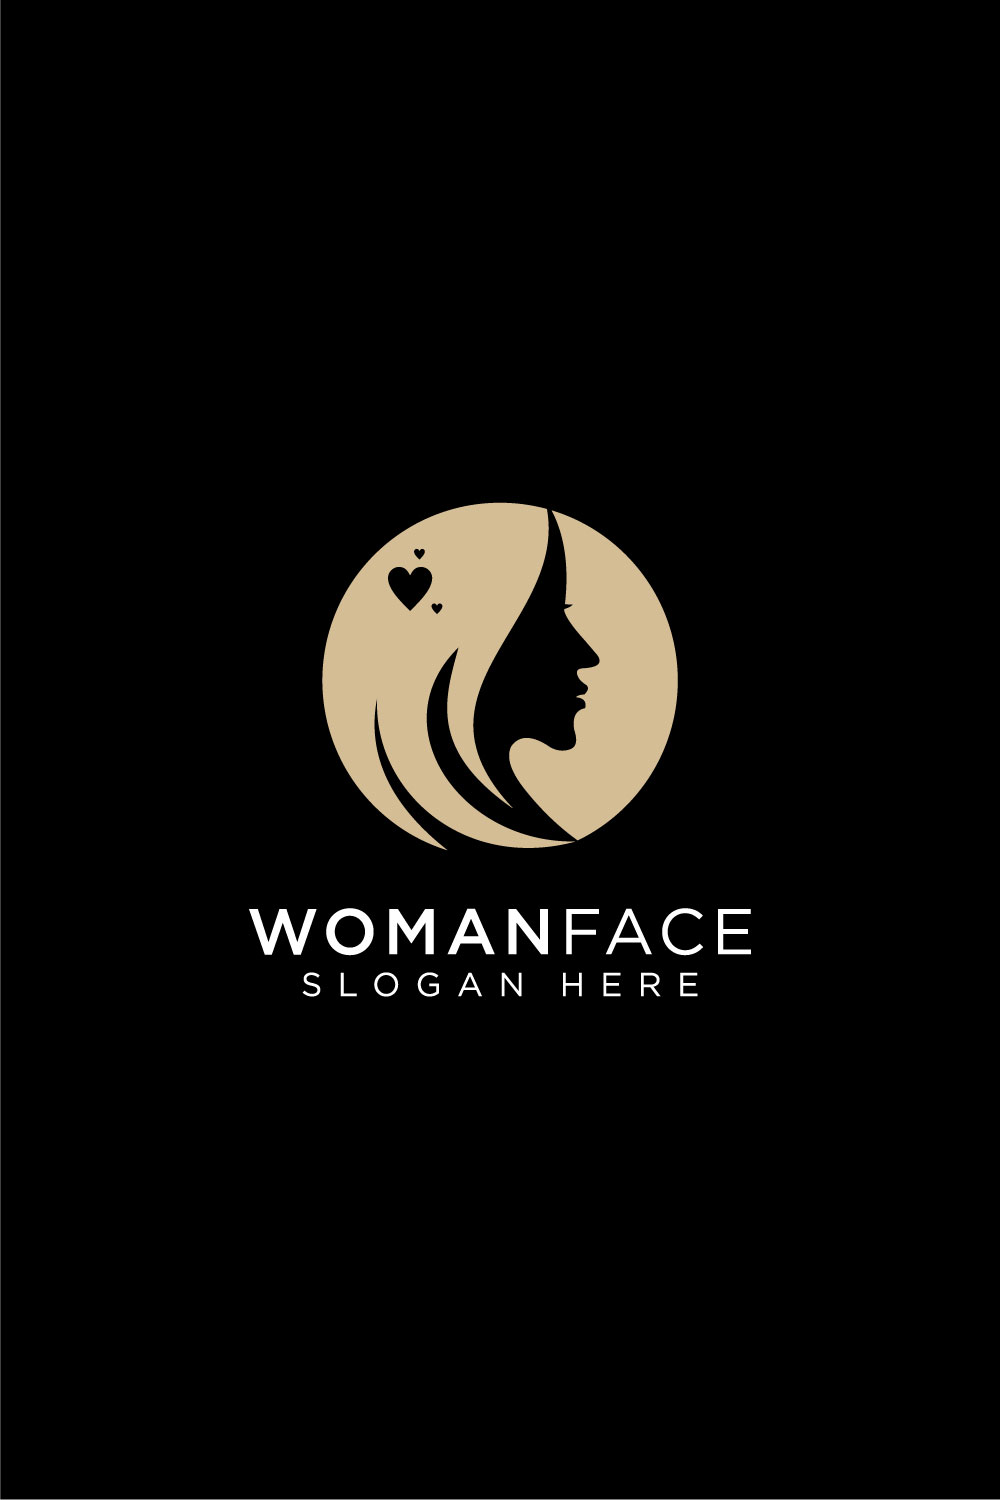 woman face logo design vector pinterest preview image.